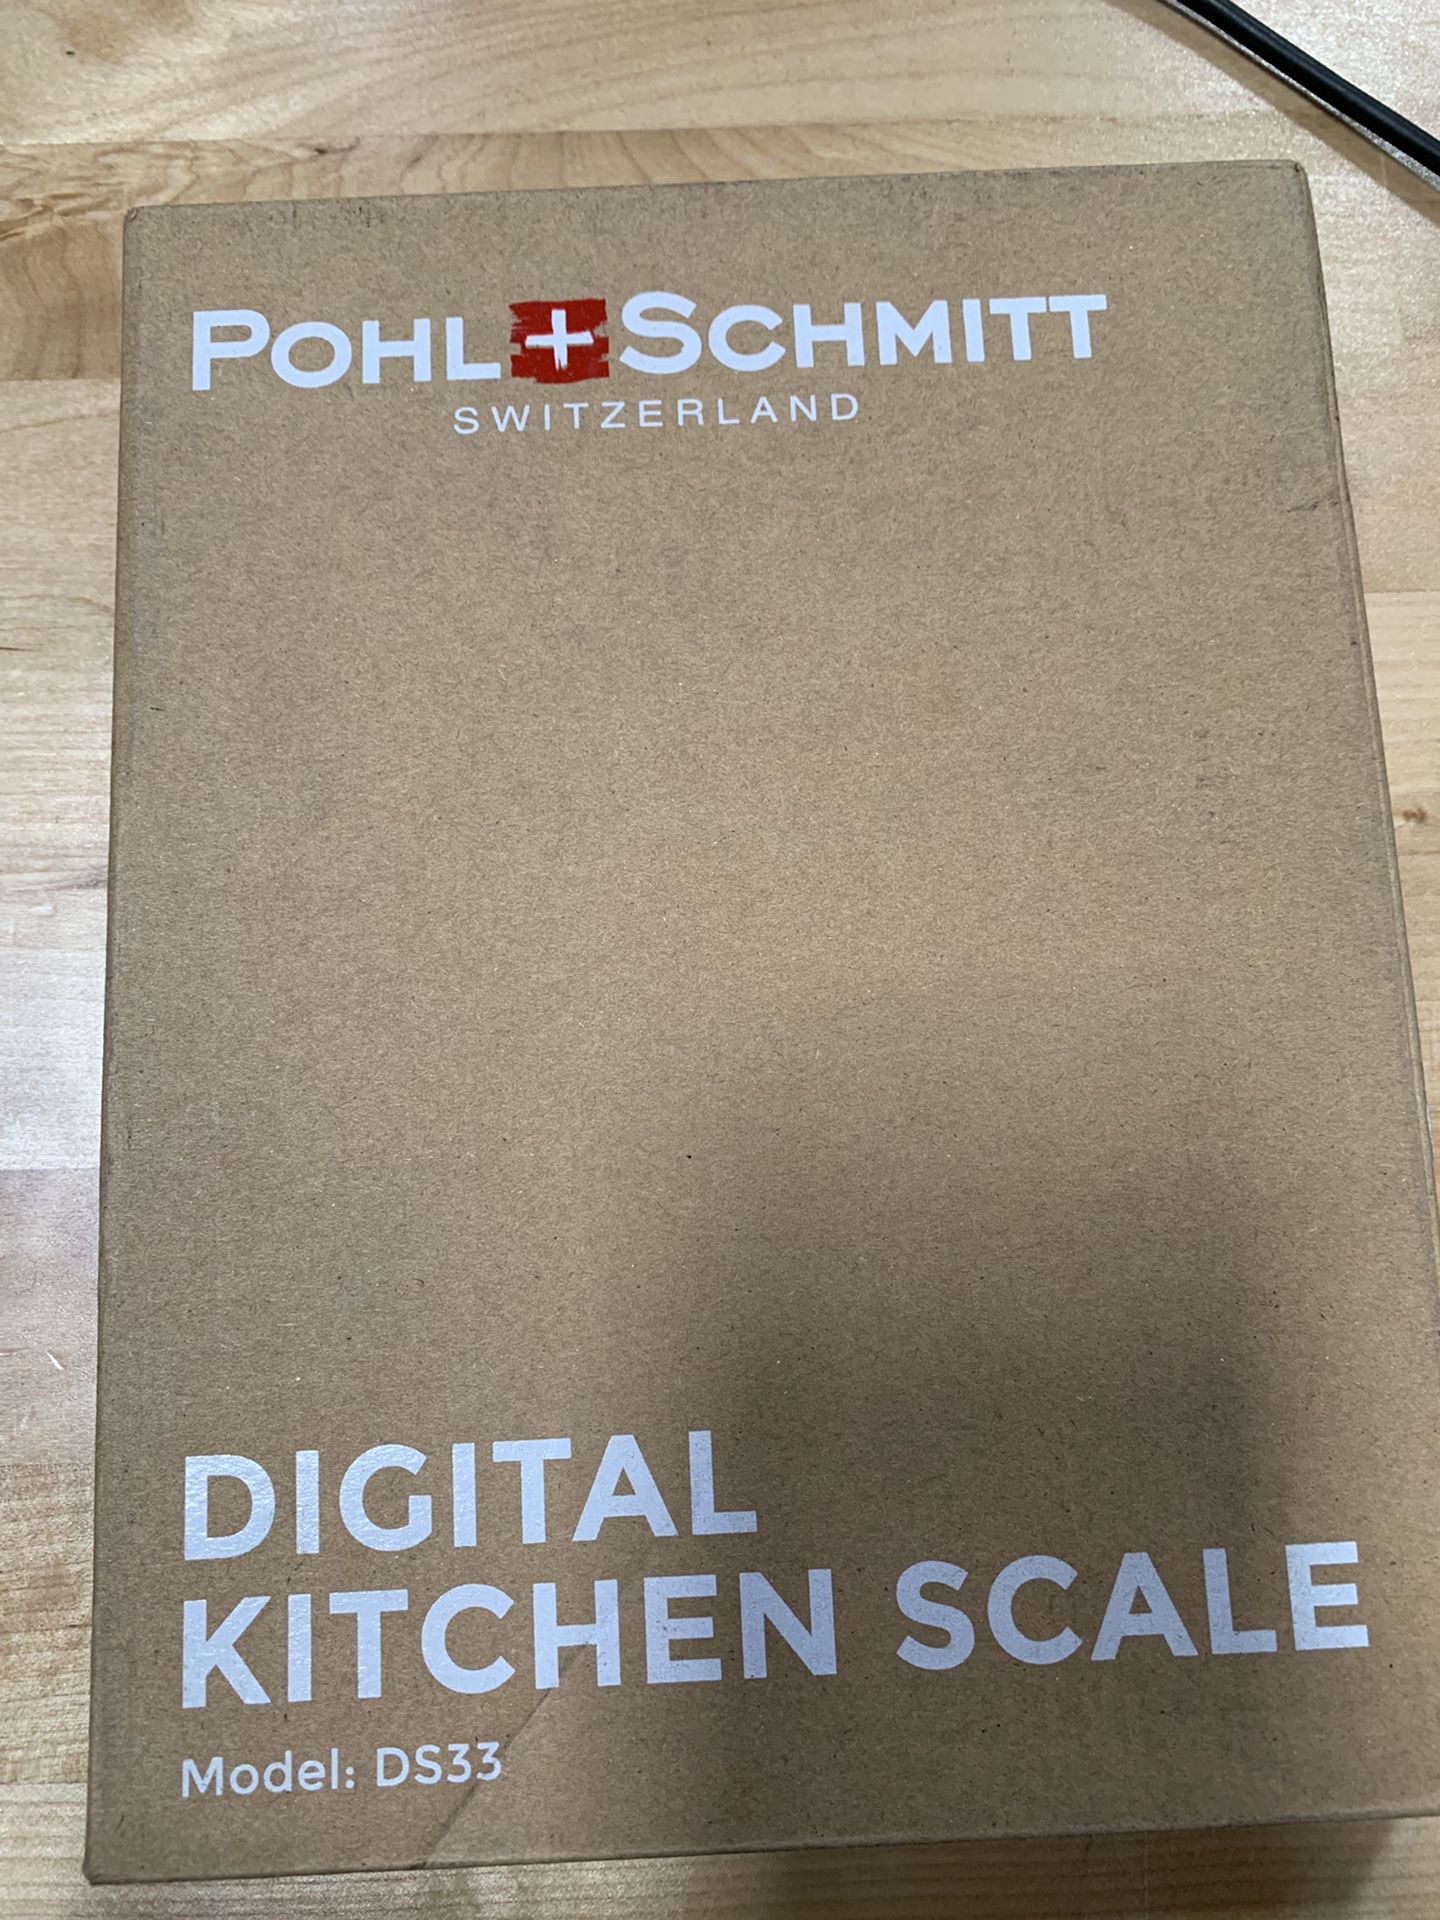 Digital Food Scale